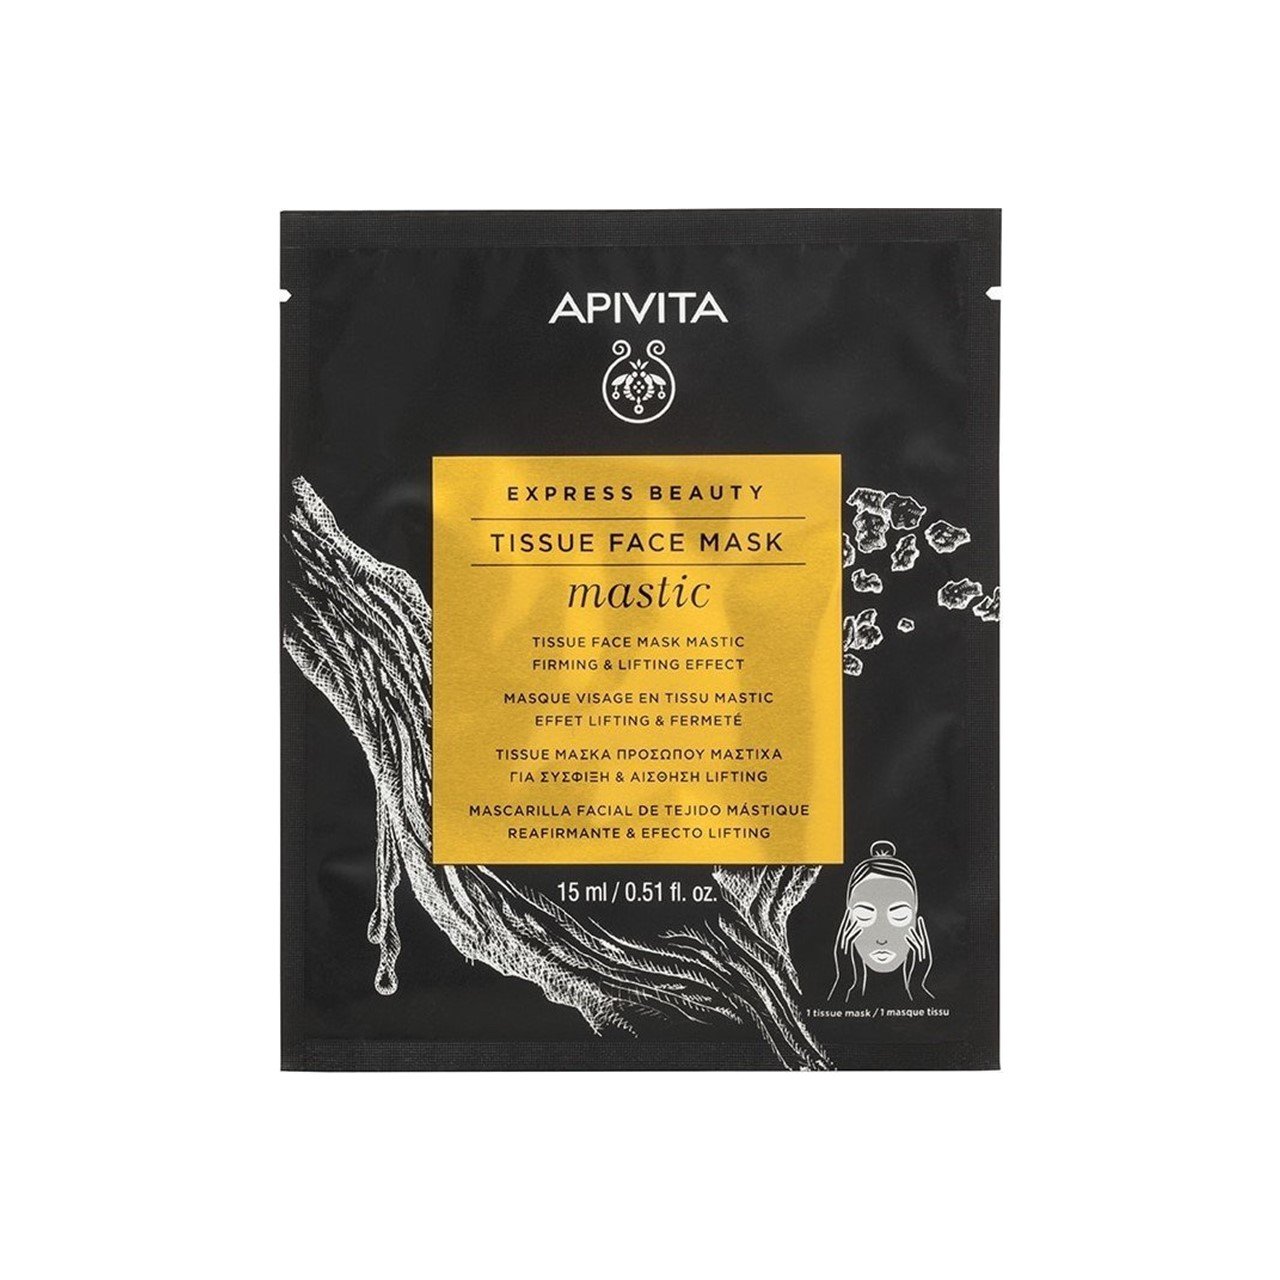 APIVITA Express Beauty Tissue Face Mask Mastic 15ml